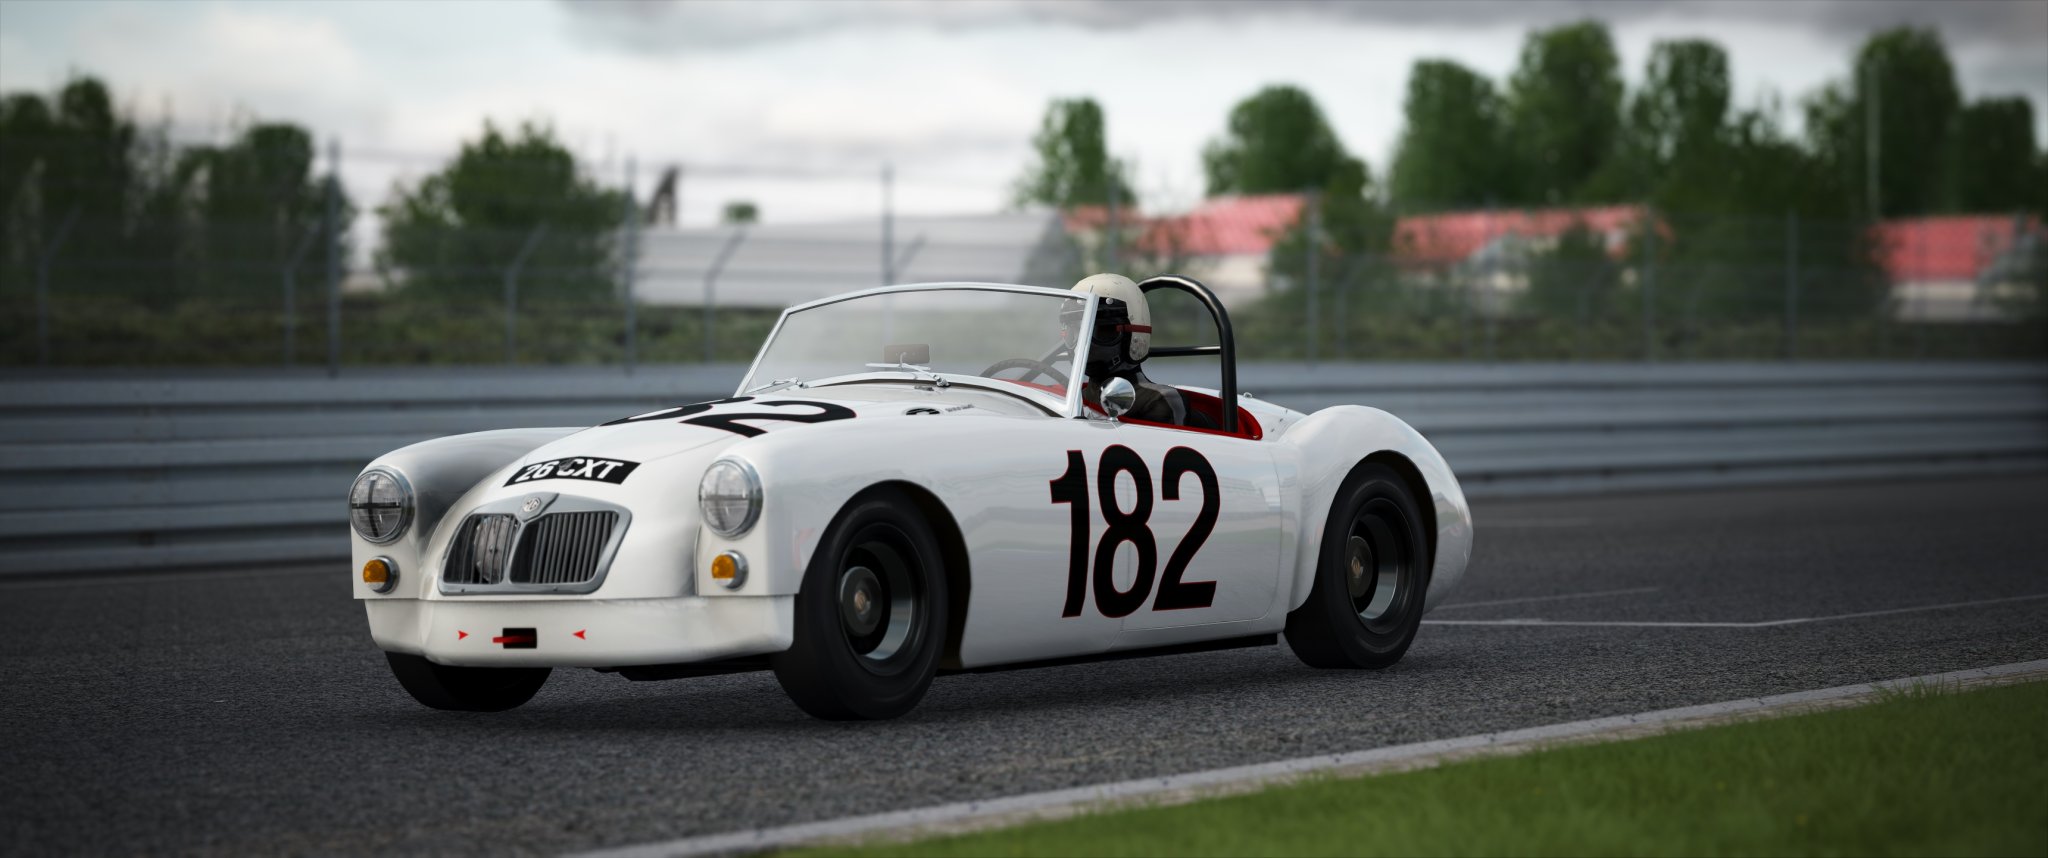 Screenshot_tc_legends_mg_a_race_ks_nurburgring_4-11-123-7-29-51.jpg